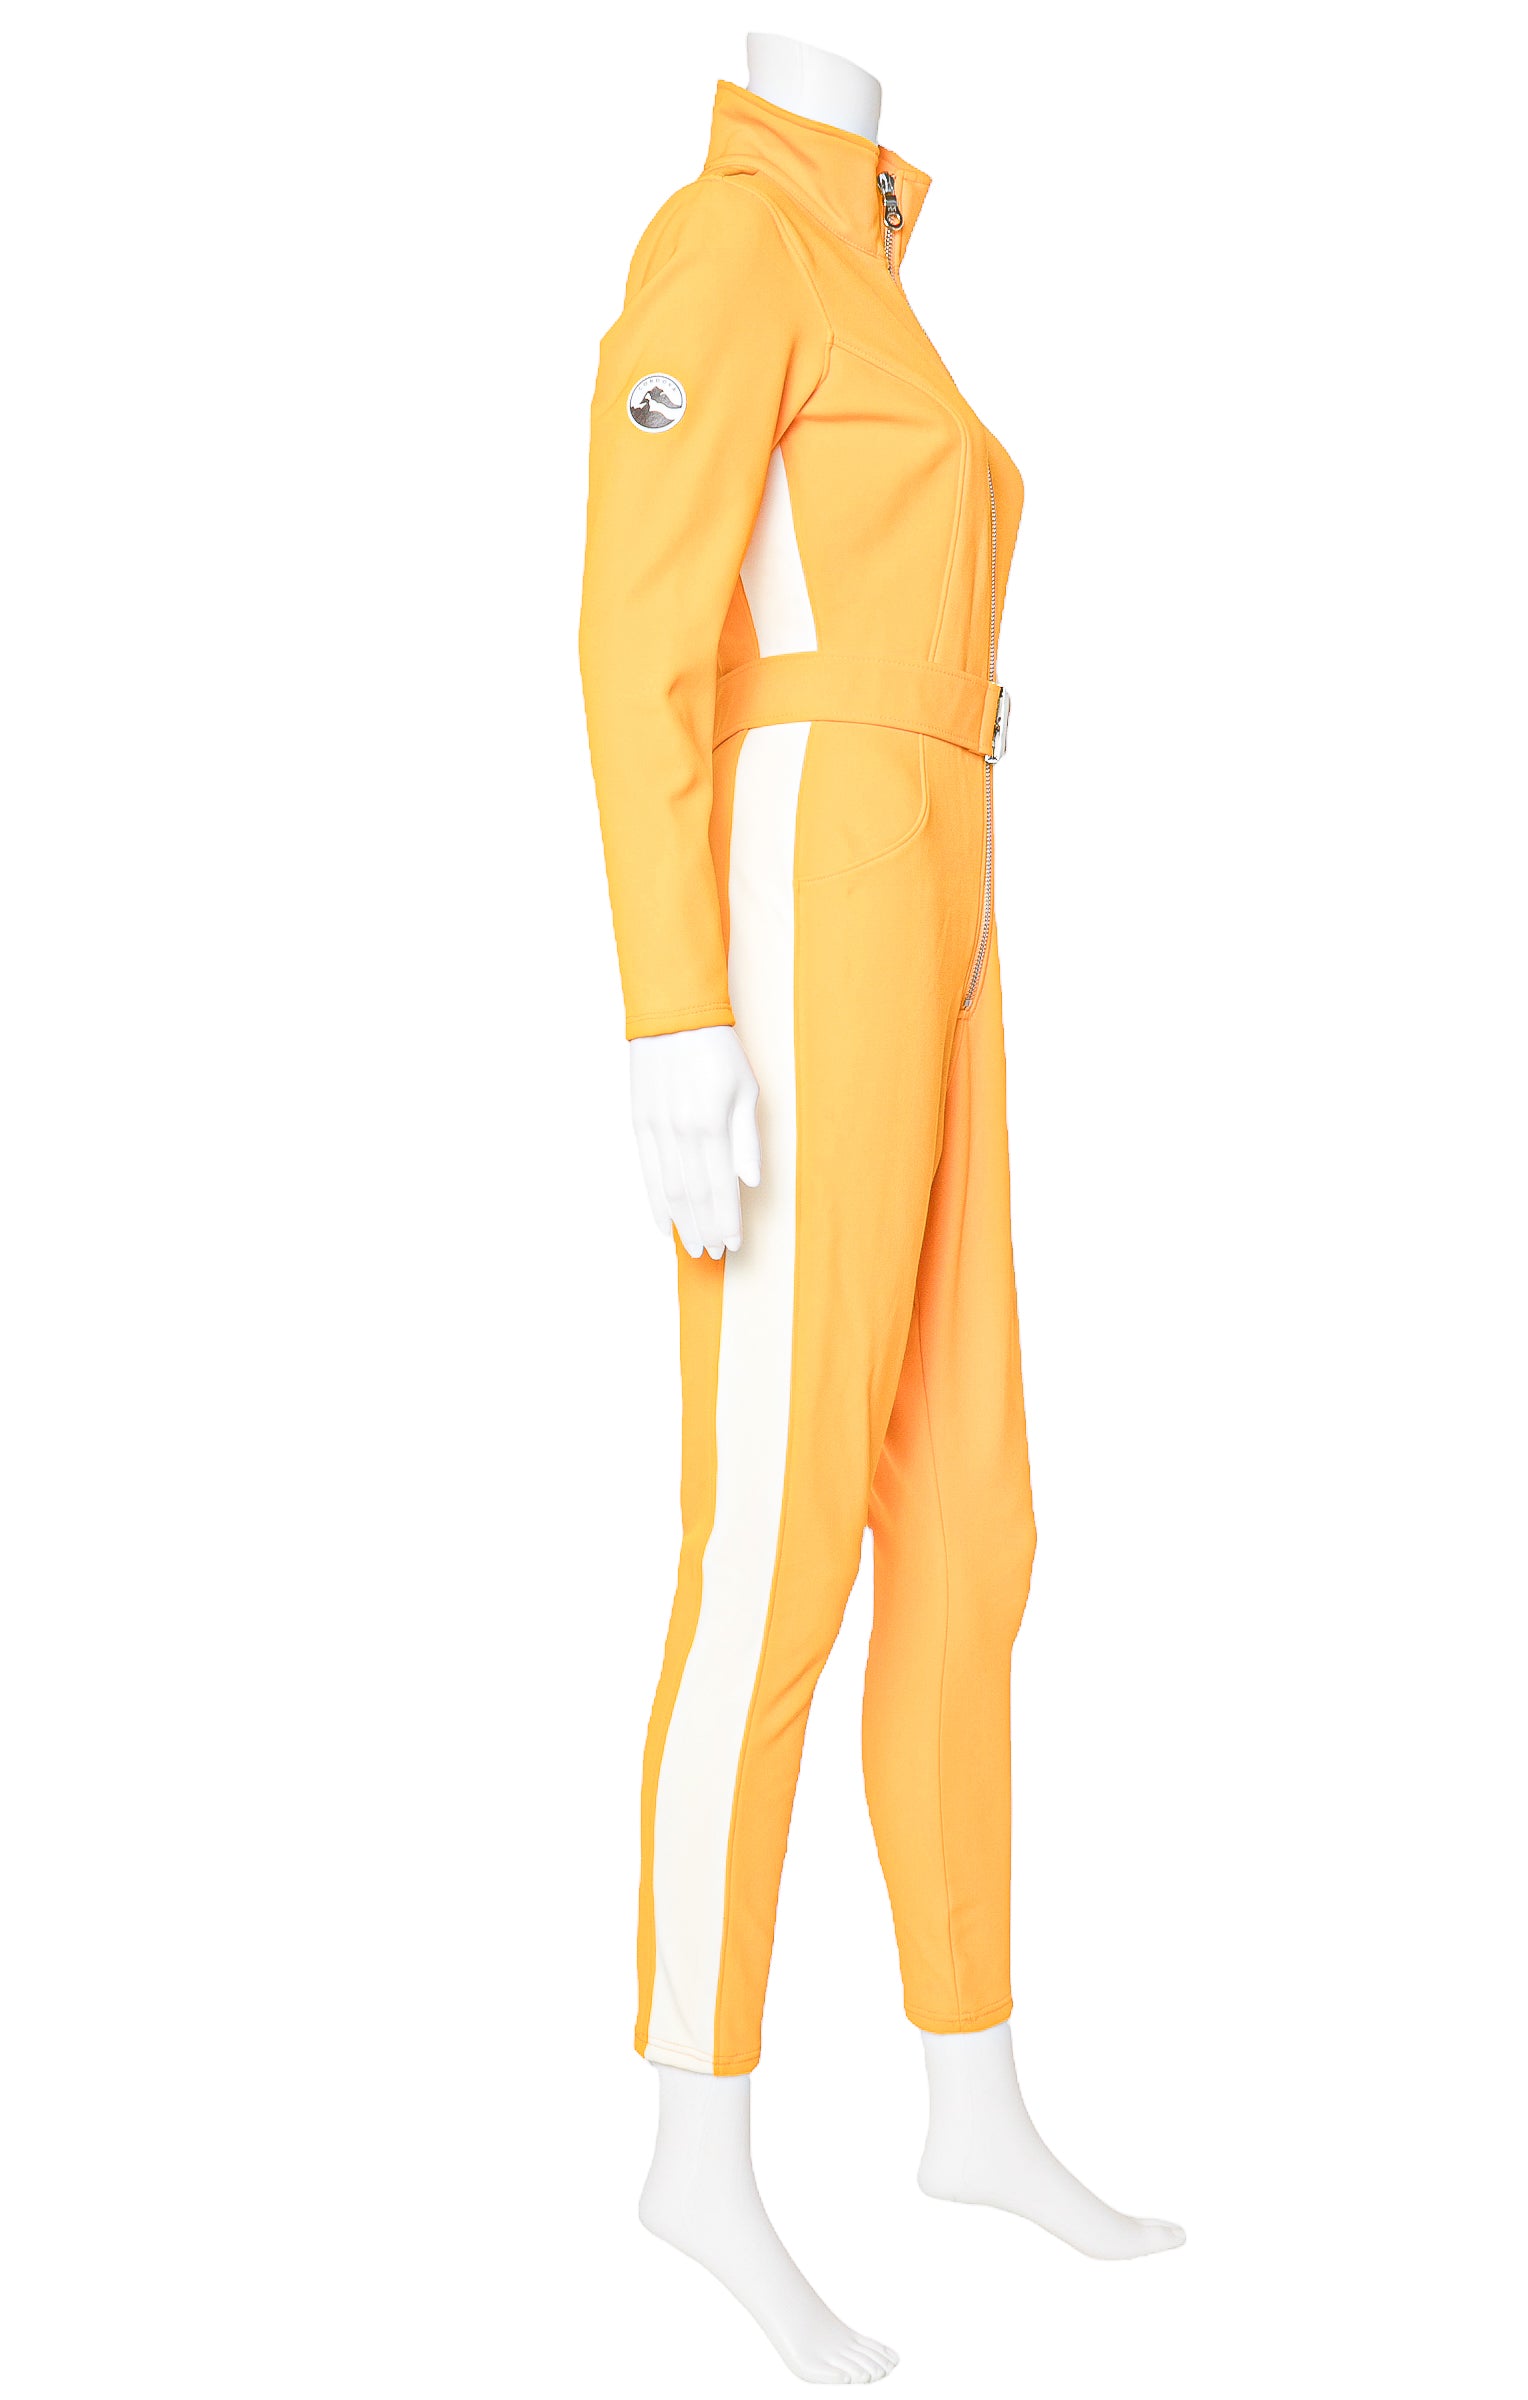 CORDOVA (RARE) Ski Suit Size: No size tags, fits like M